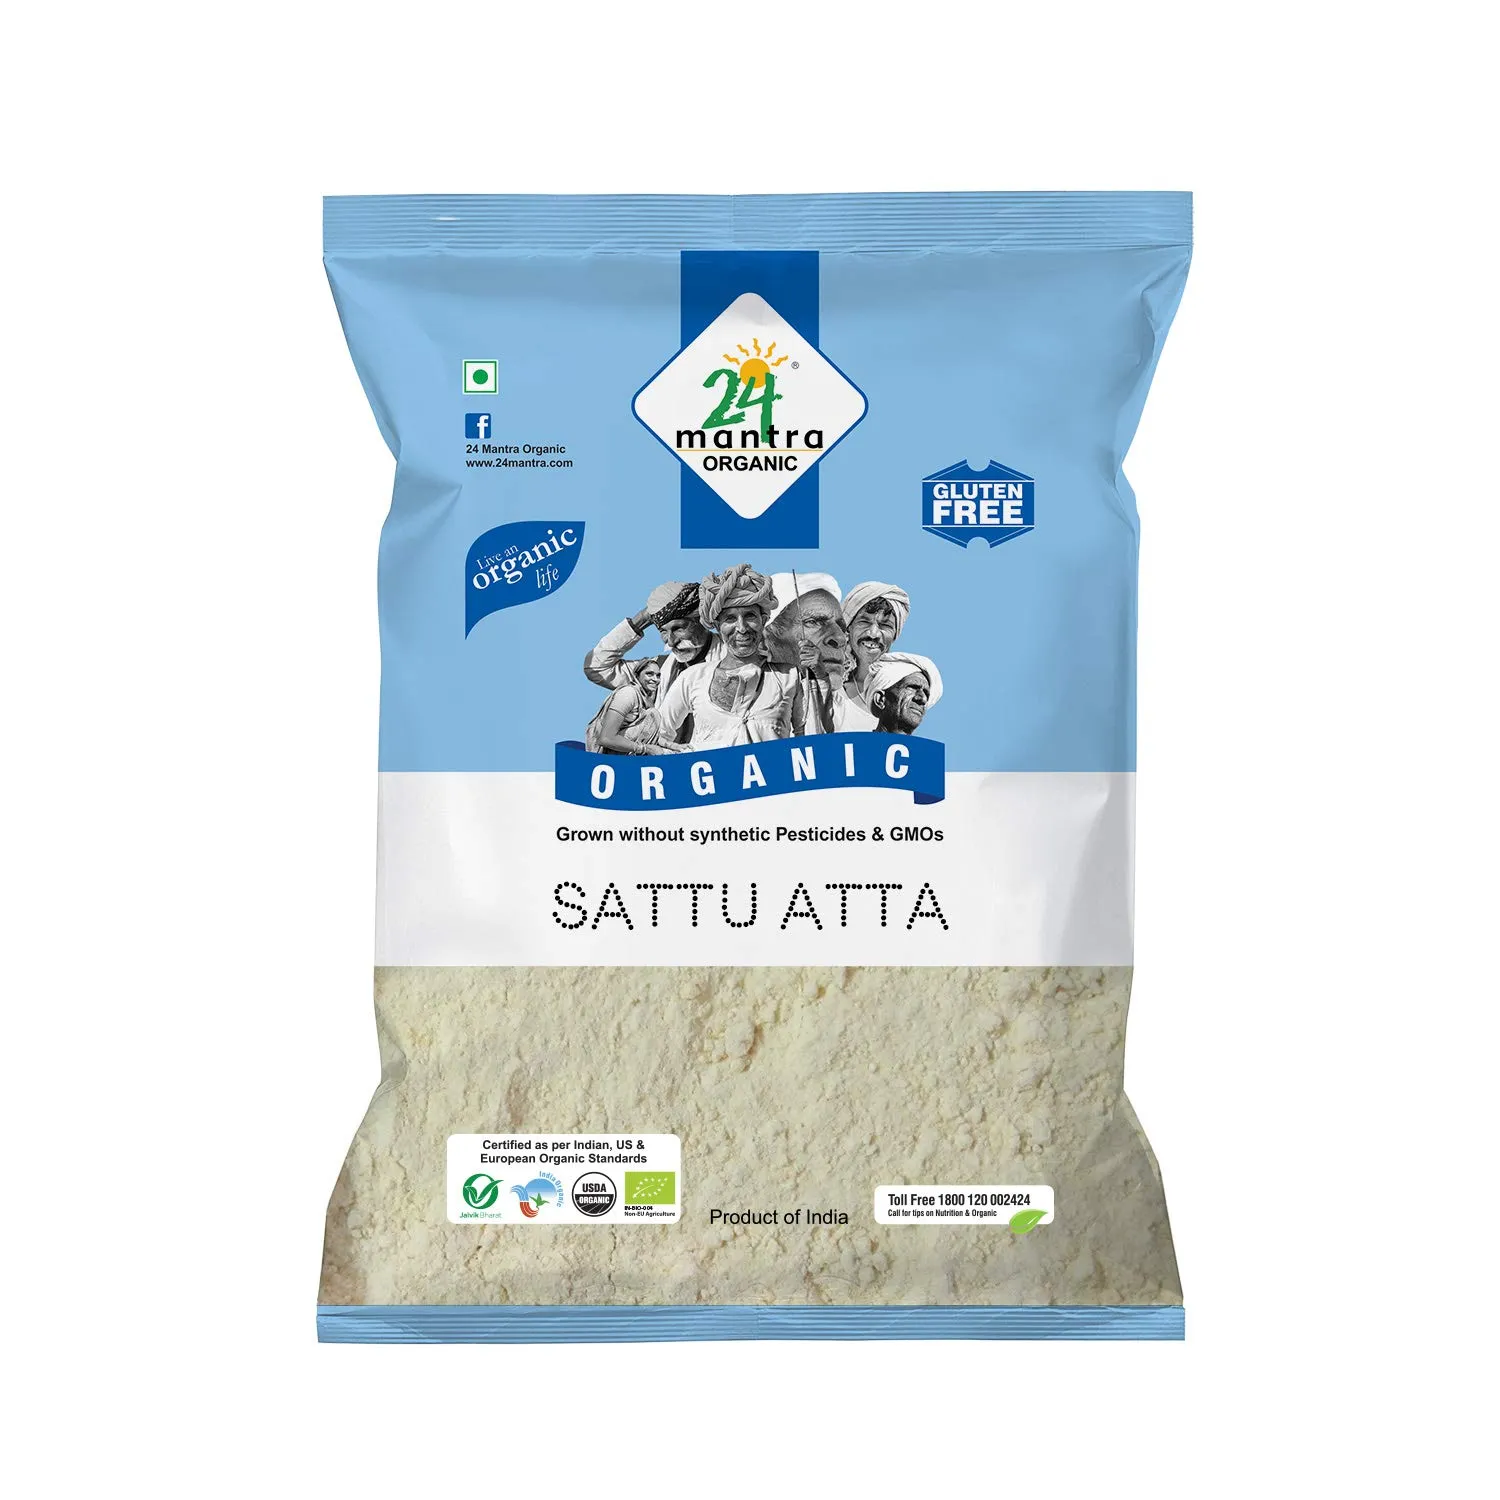 24 Mantra Organic Sattu Atta – Gluten Free 500 GM